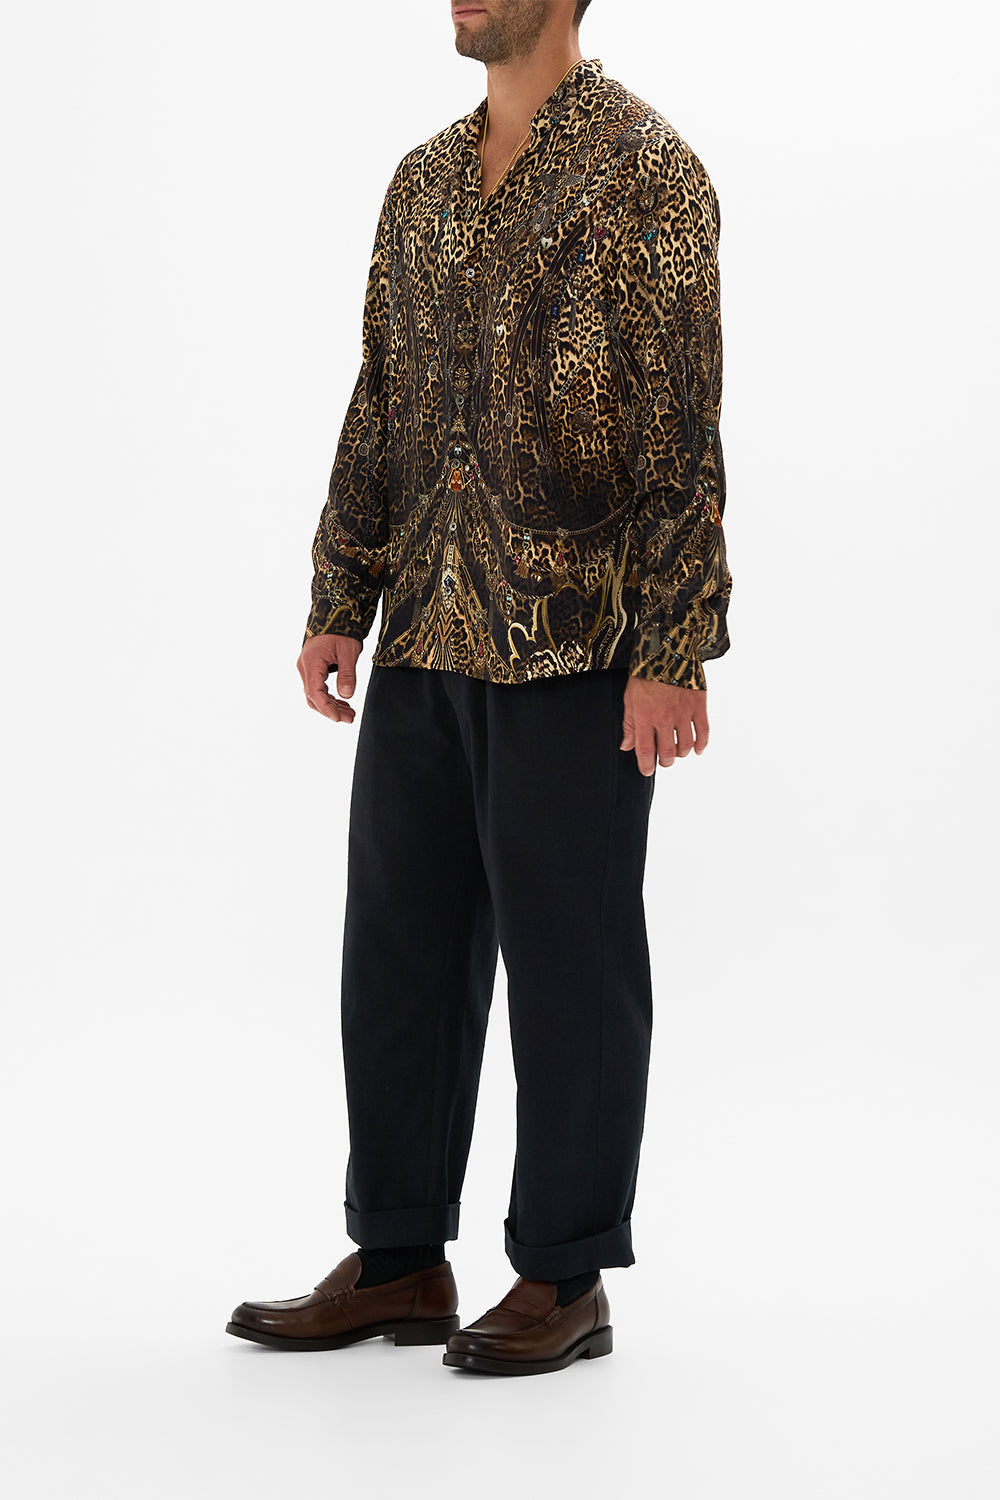 CAMILLA leopard long-sleeve mandarin collar shirt in Amsterglam print